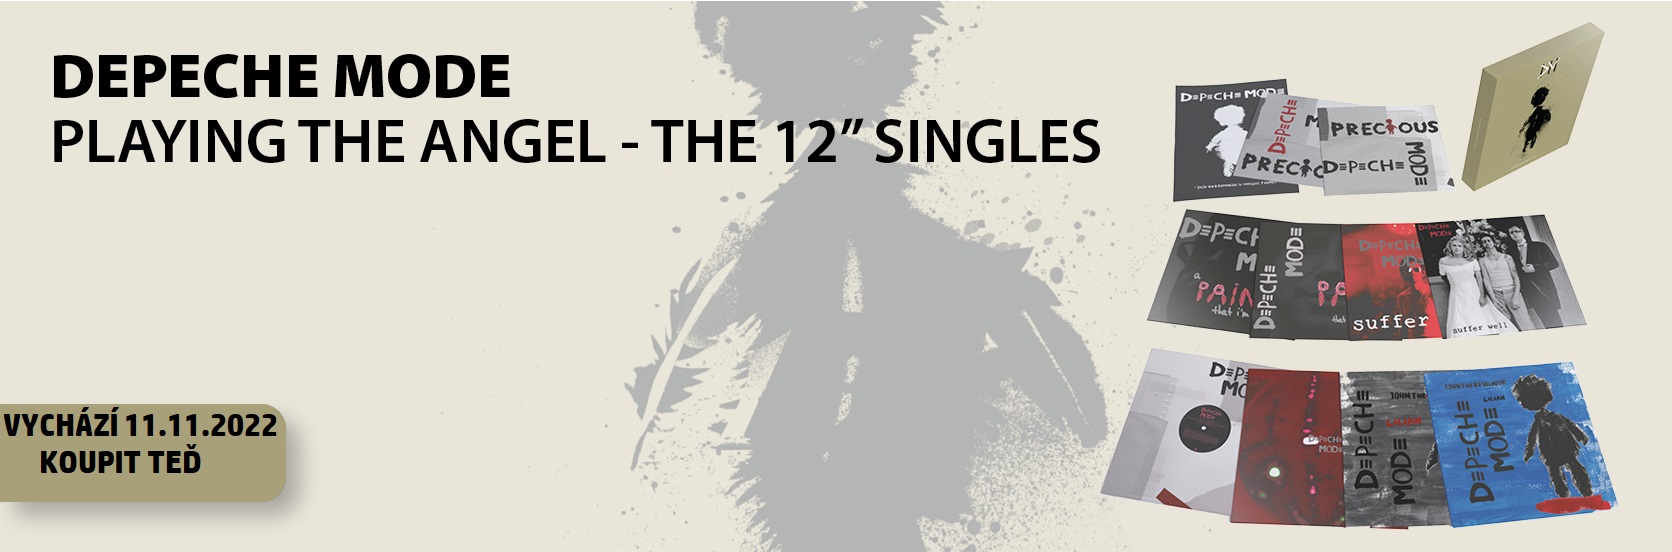 depeche mode playing the angle singles box